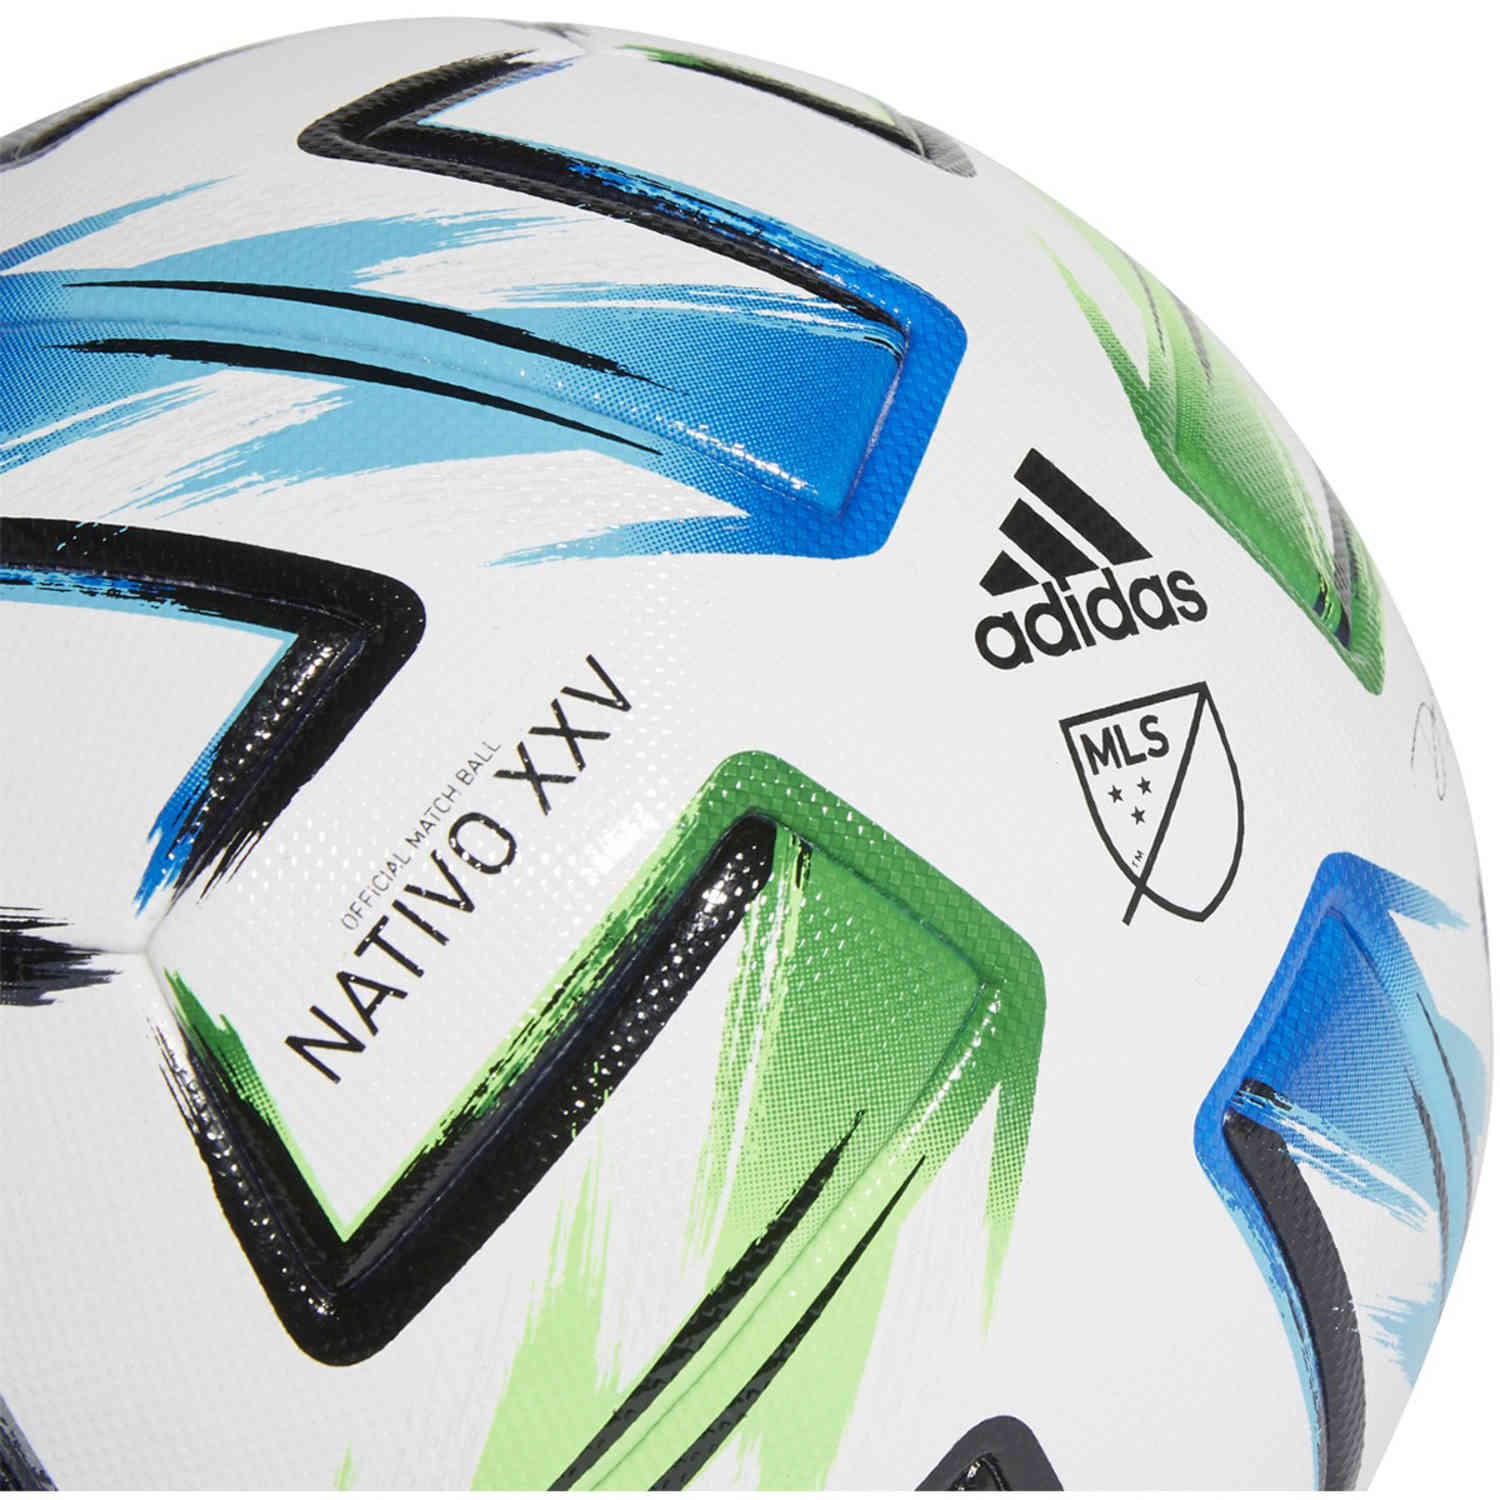 adidas MLS Pro Official Match Soccer Ball 2020 SoccerPro